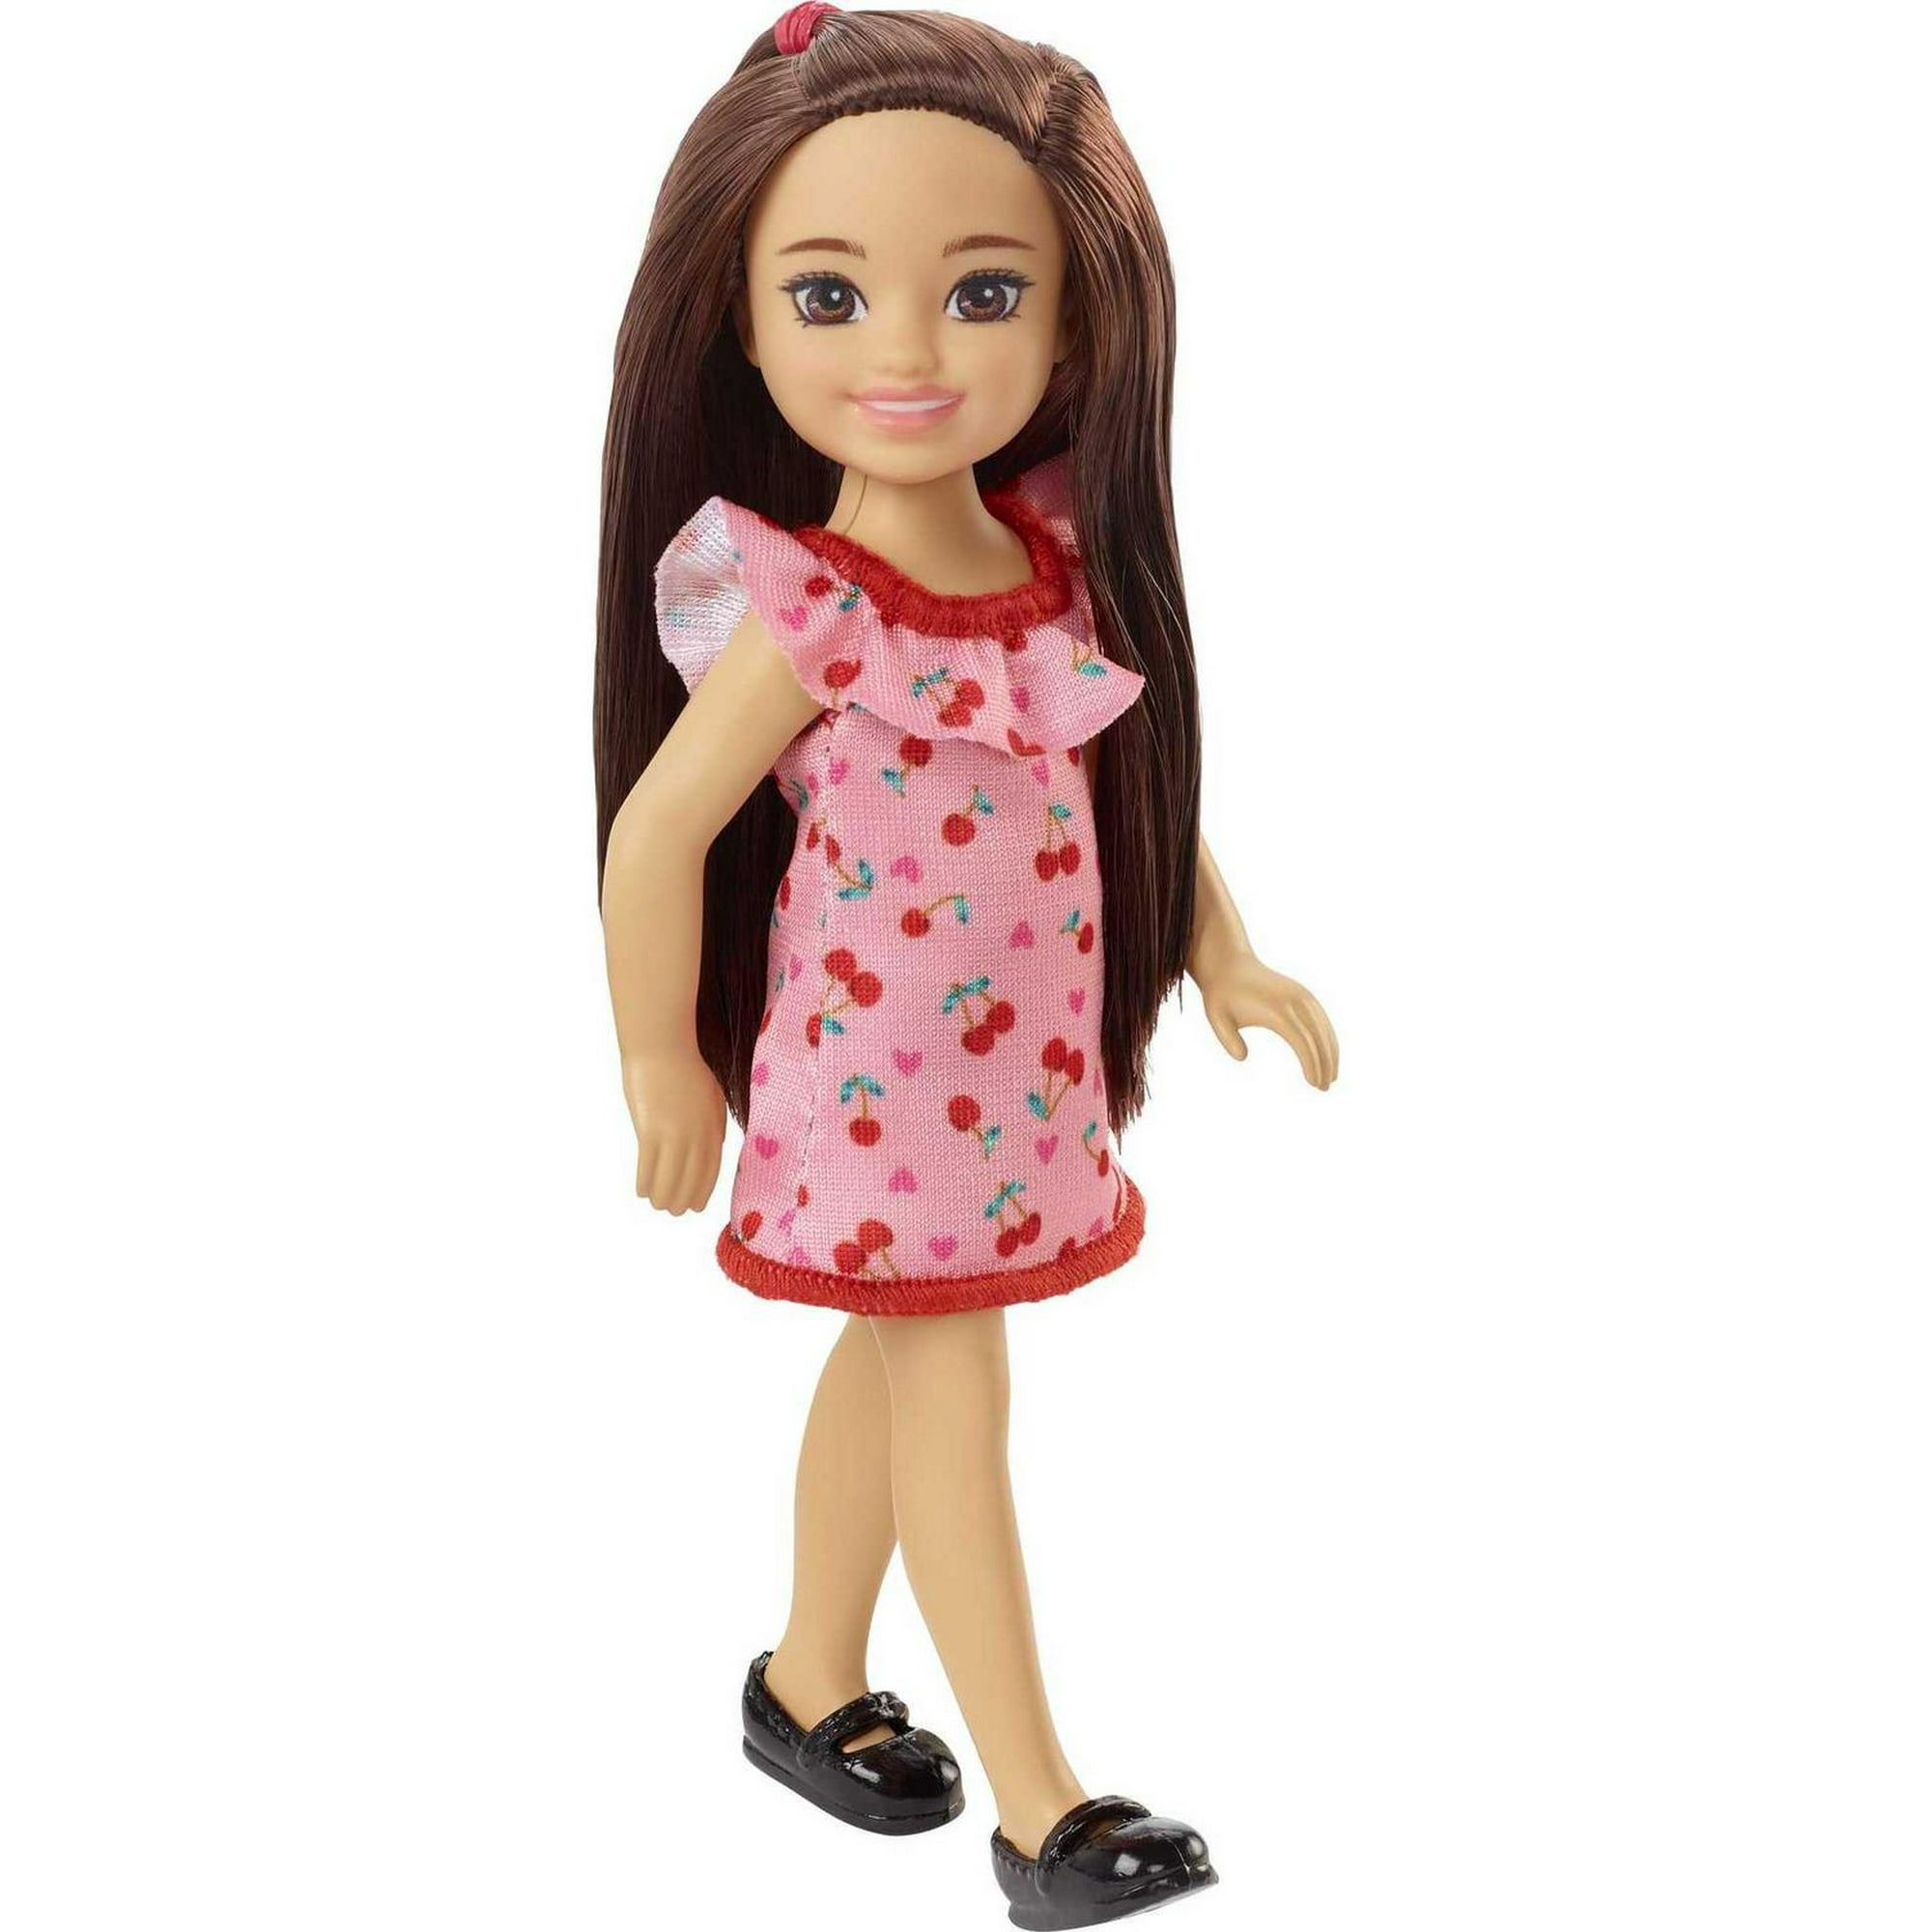 Barbie Chelsea Doll Assortment – Walmart Inventory Checker – BrickSeek